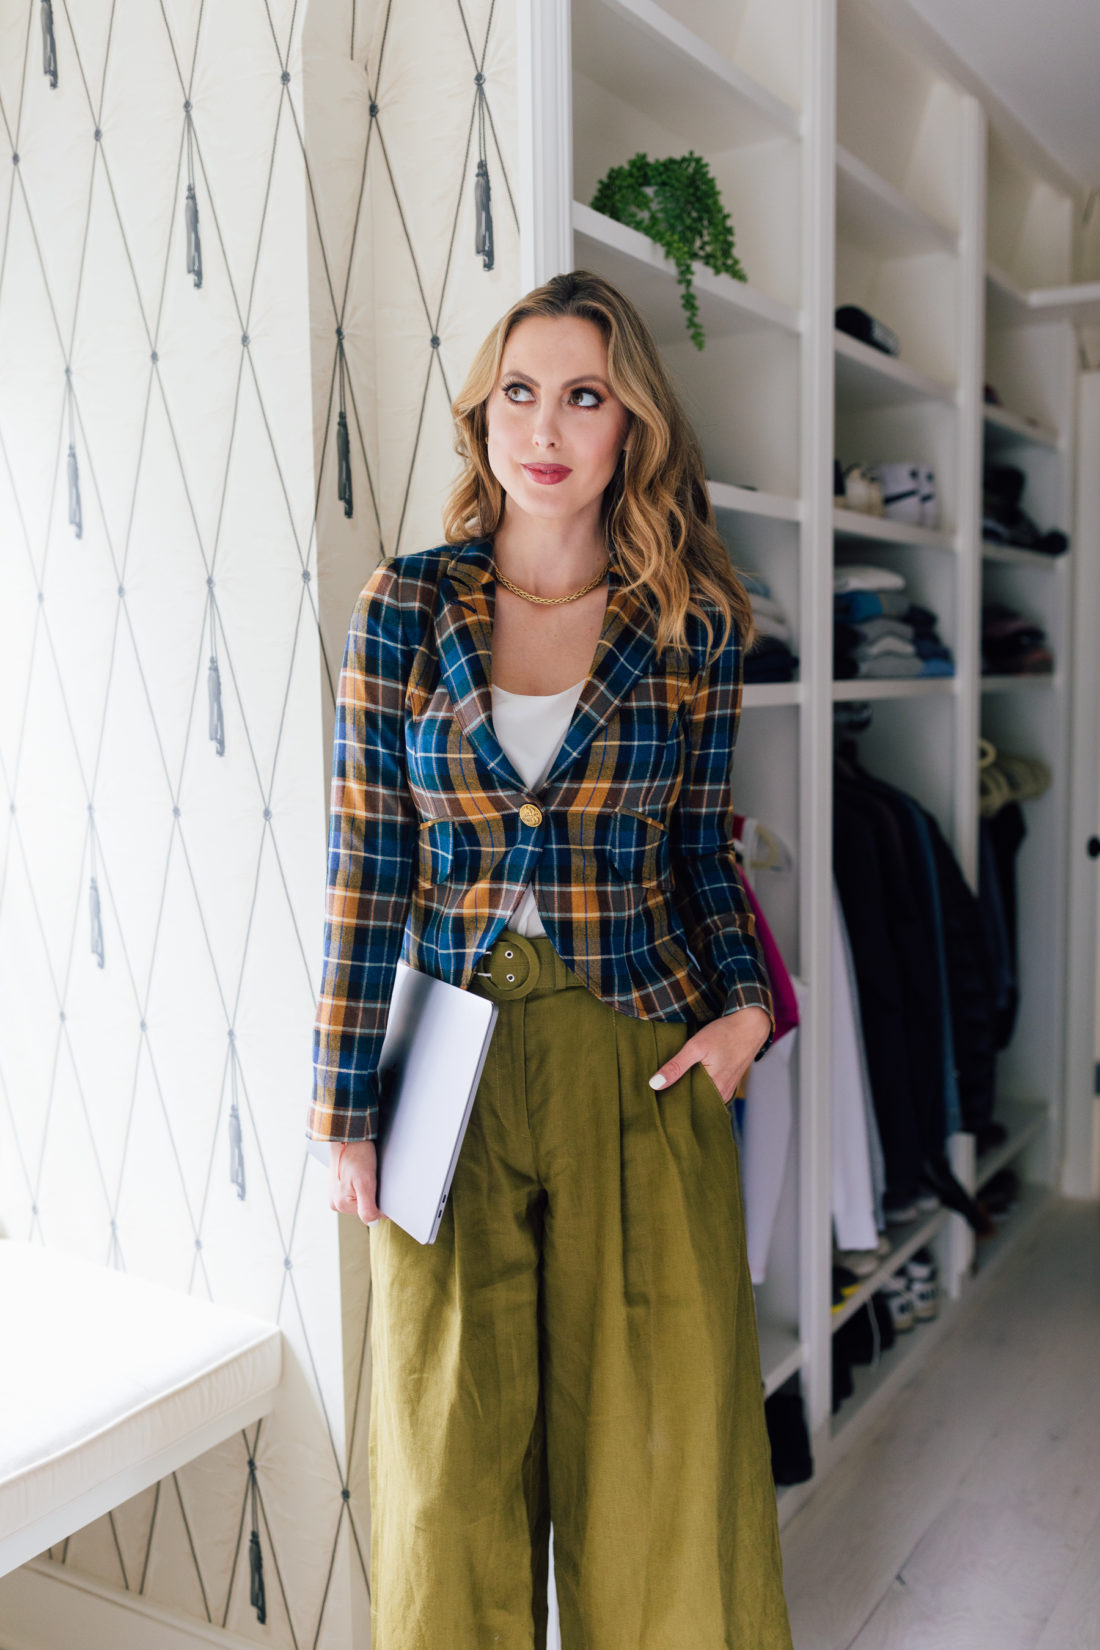 Eva Amurri Martino wears a fall blazer in her walk-in closet